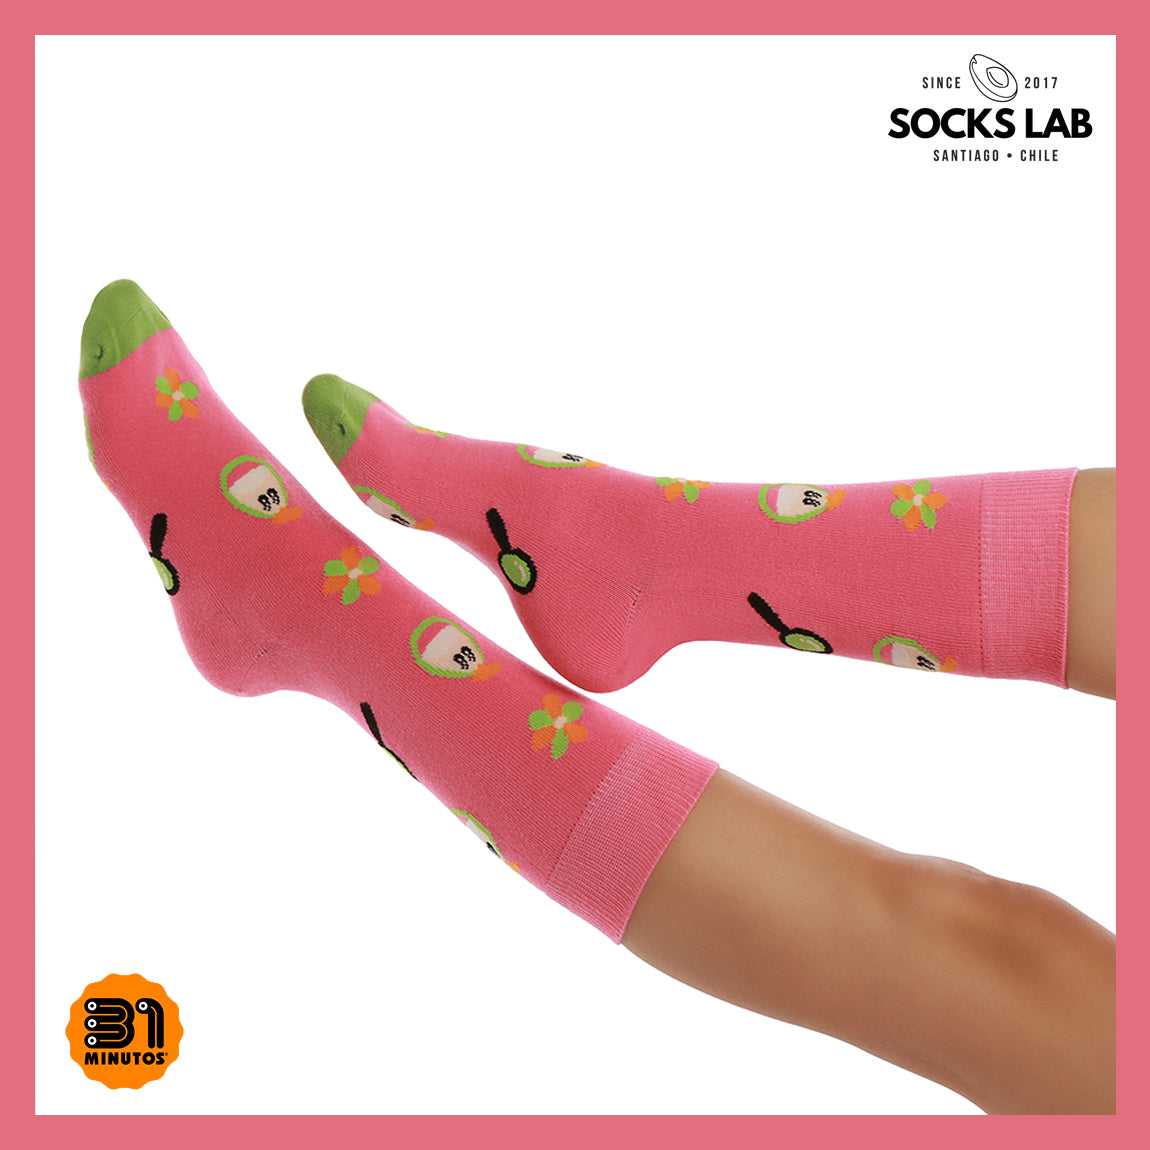 Calcetines con diseño Socks Lab - Patana - 31 minutos